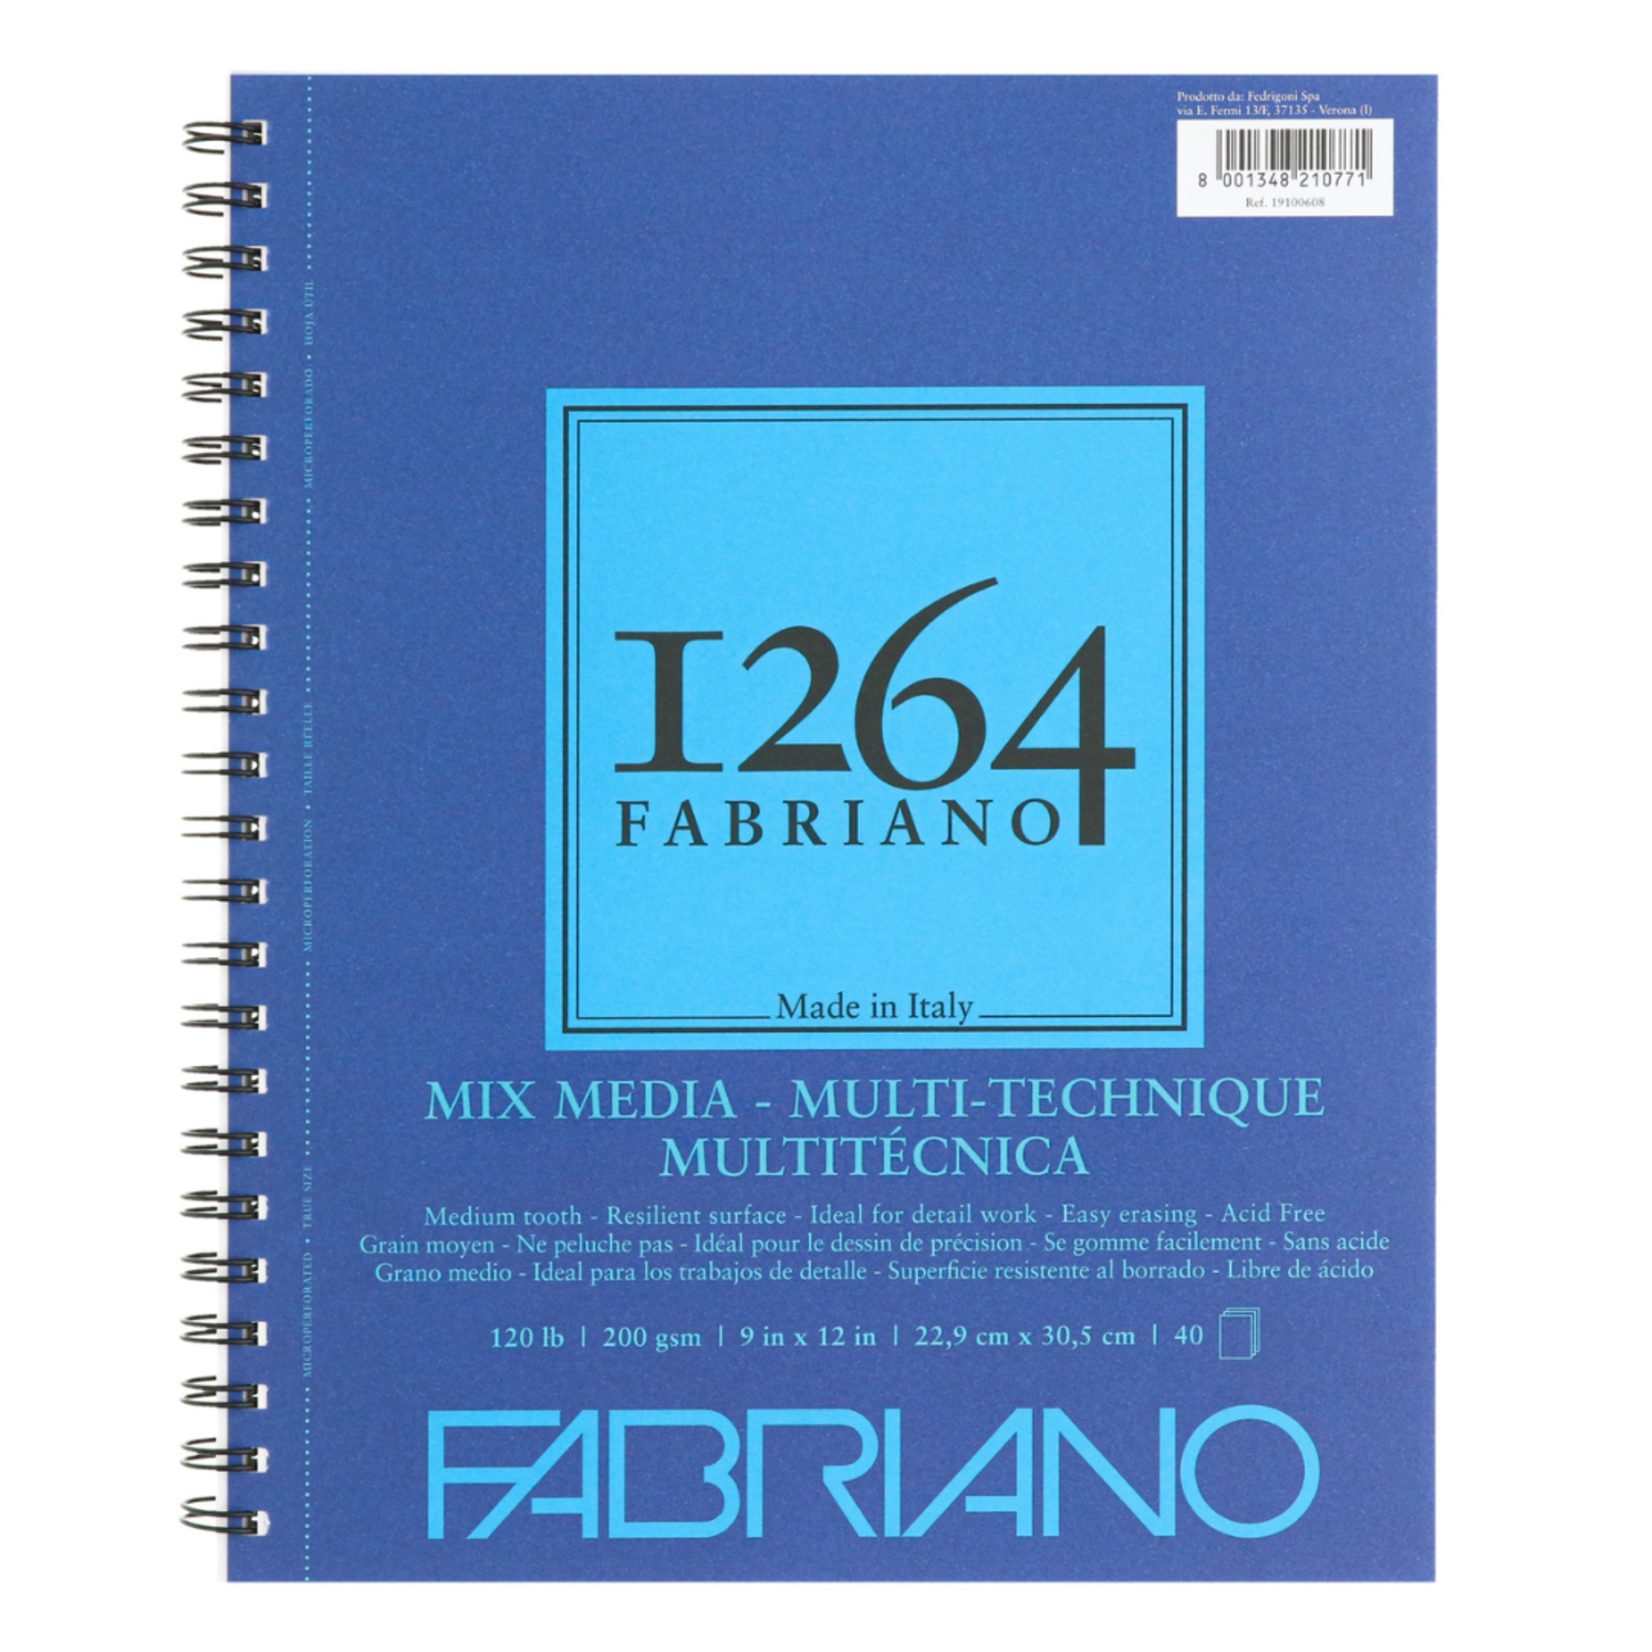 FABRIANO 1264 MIX MEDIA 120LB 9X12 40/SH